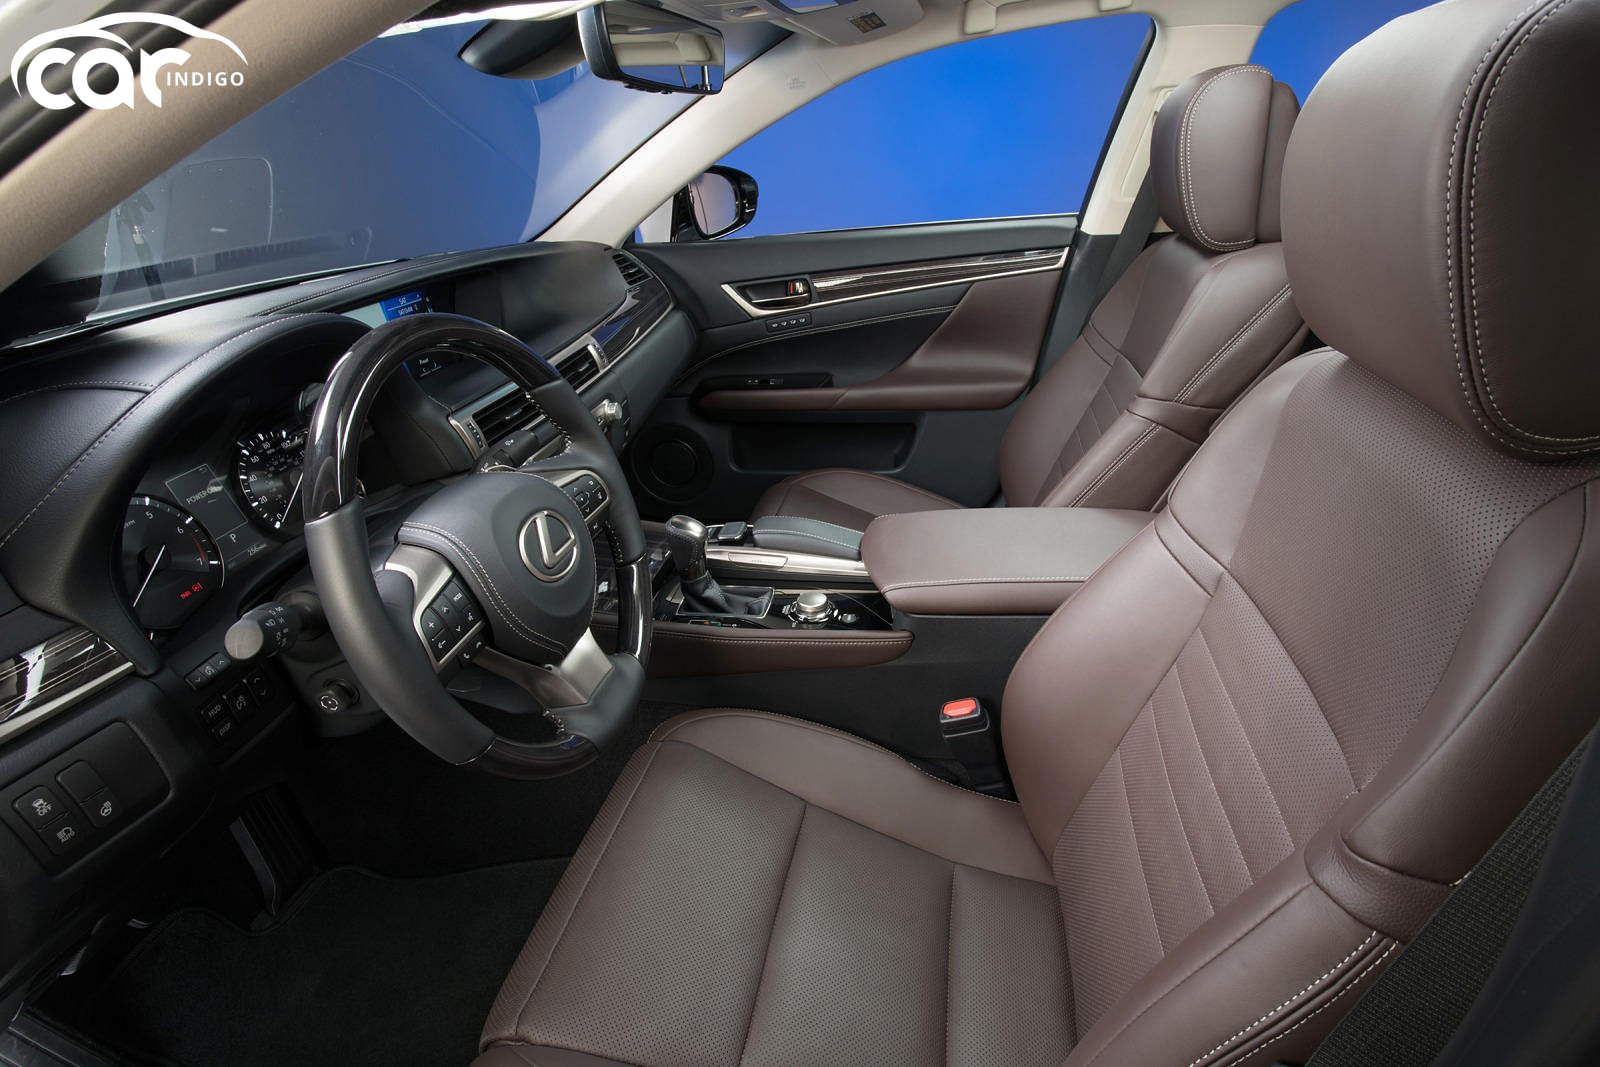 18 Lexus Gs 350 Interior Review Seating Infotainment Dashboard And Features Carindigo Com